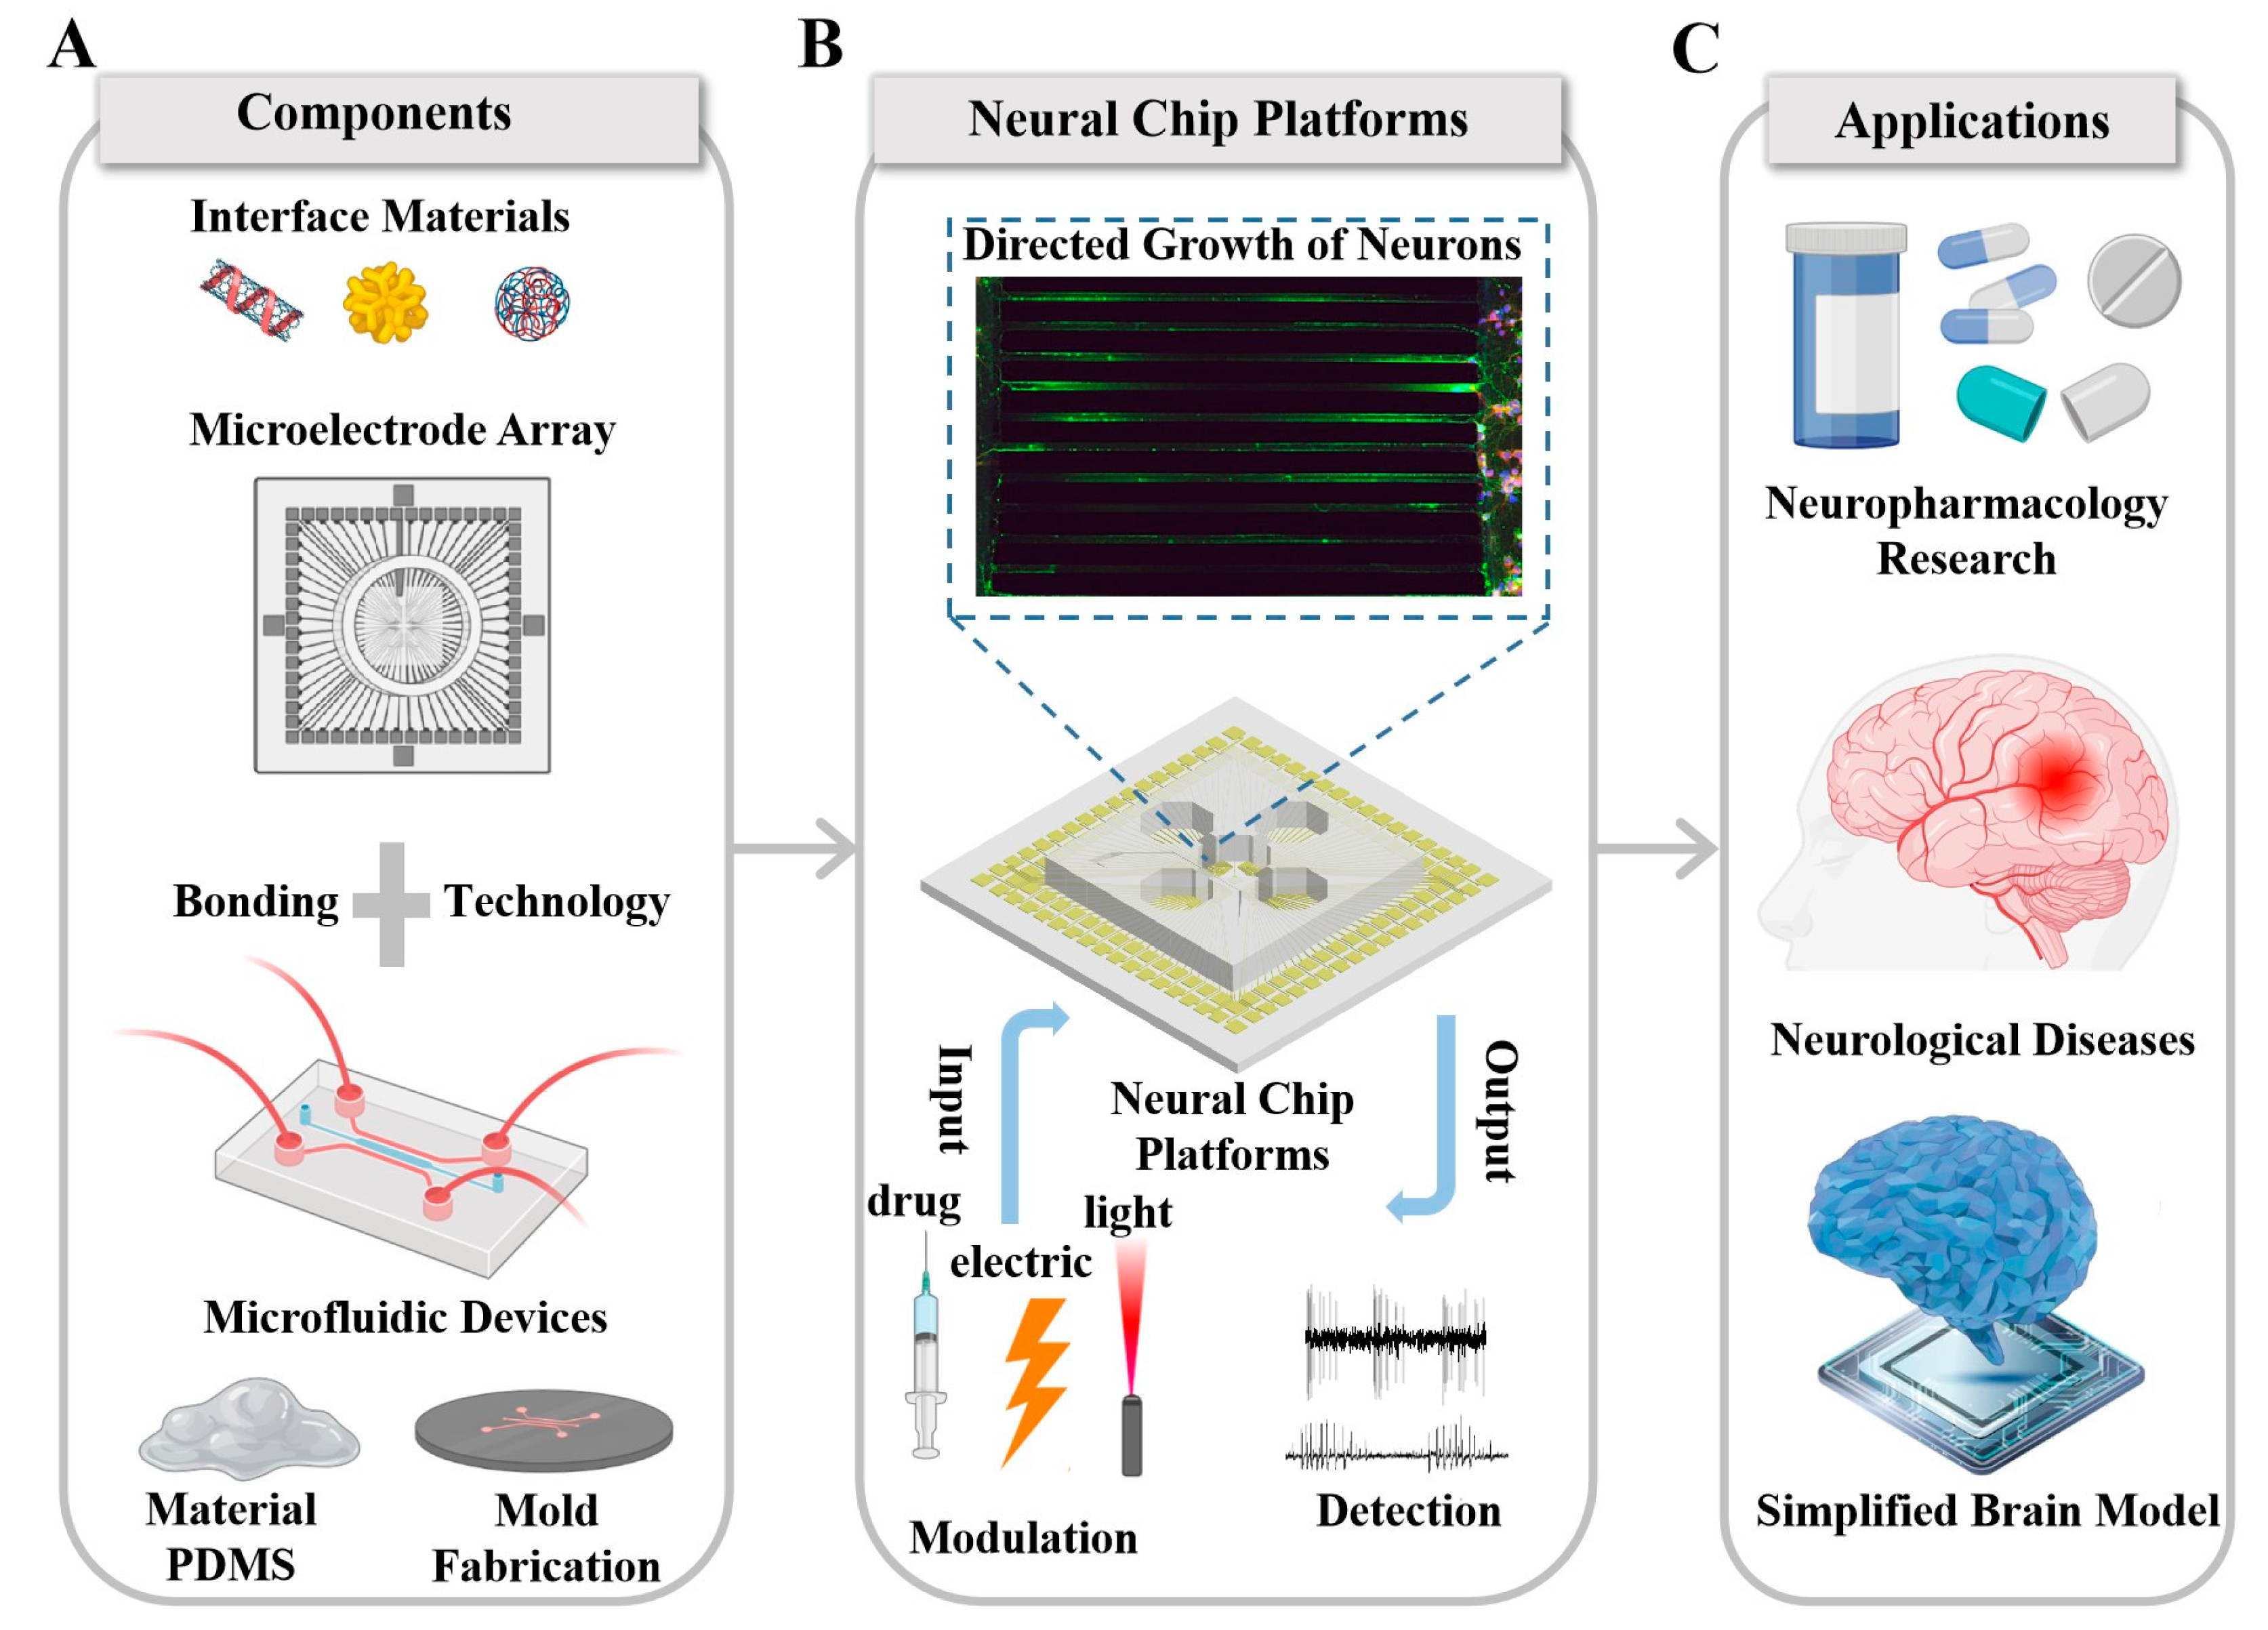 Neurons-on-a-Chip for Drug Development & Neurotoxicity